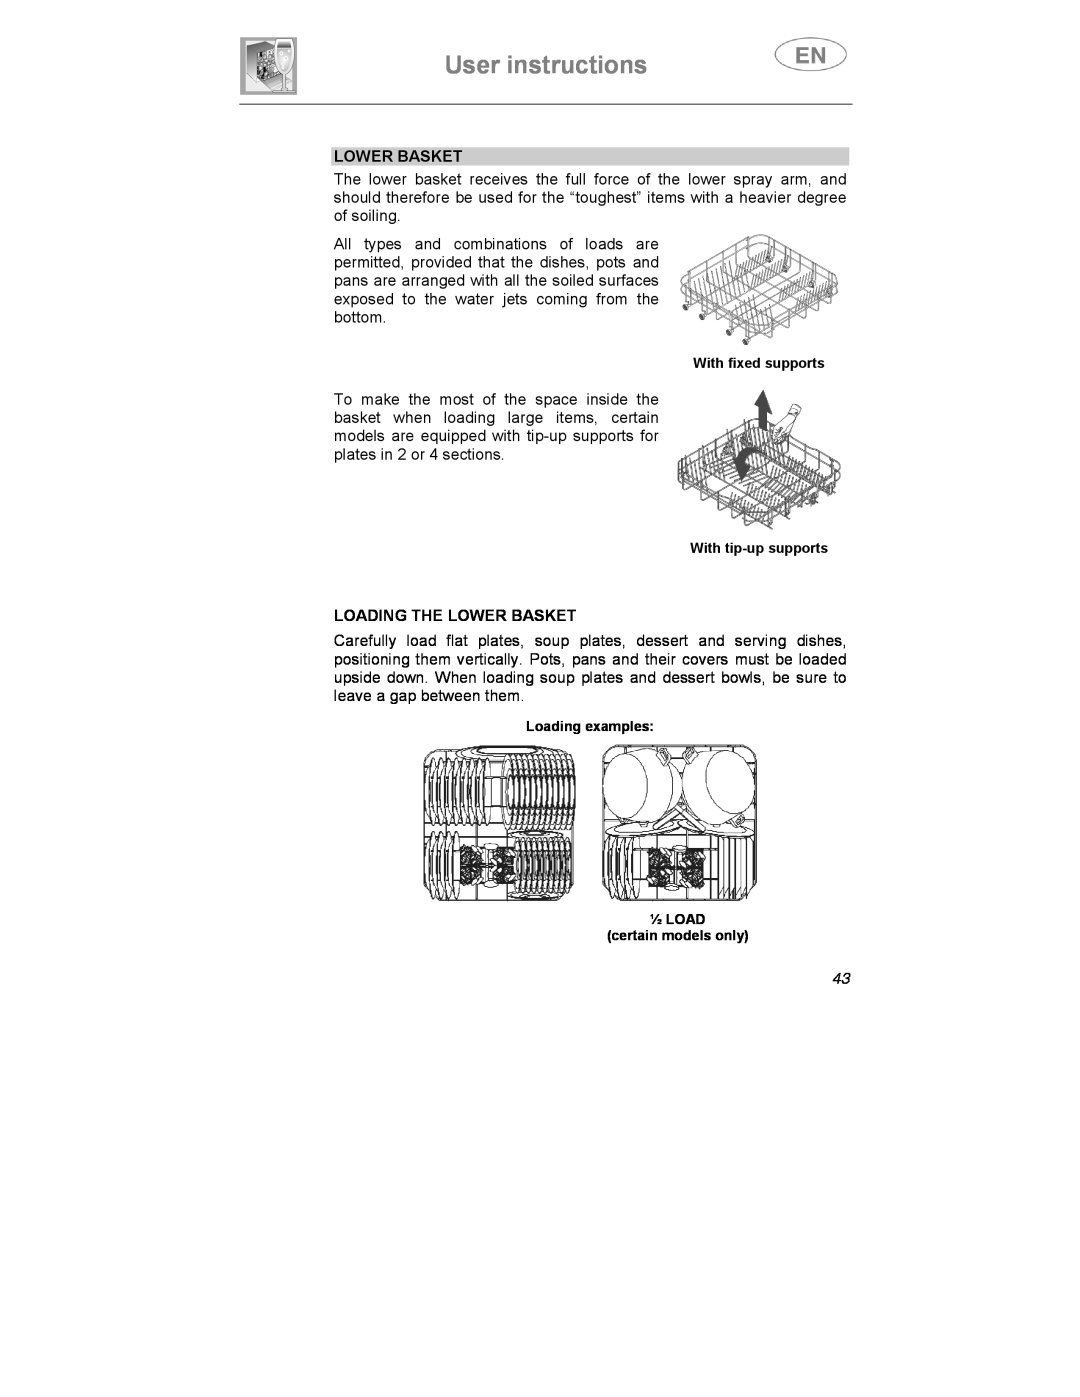 Smeg KS60-3T, KS60-2 instruction manual User instructions, Loading The Lower Basket 